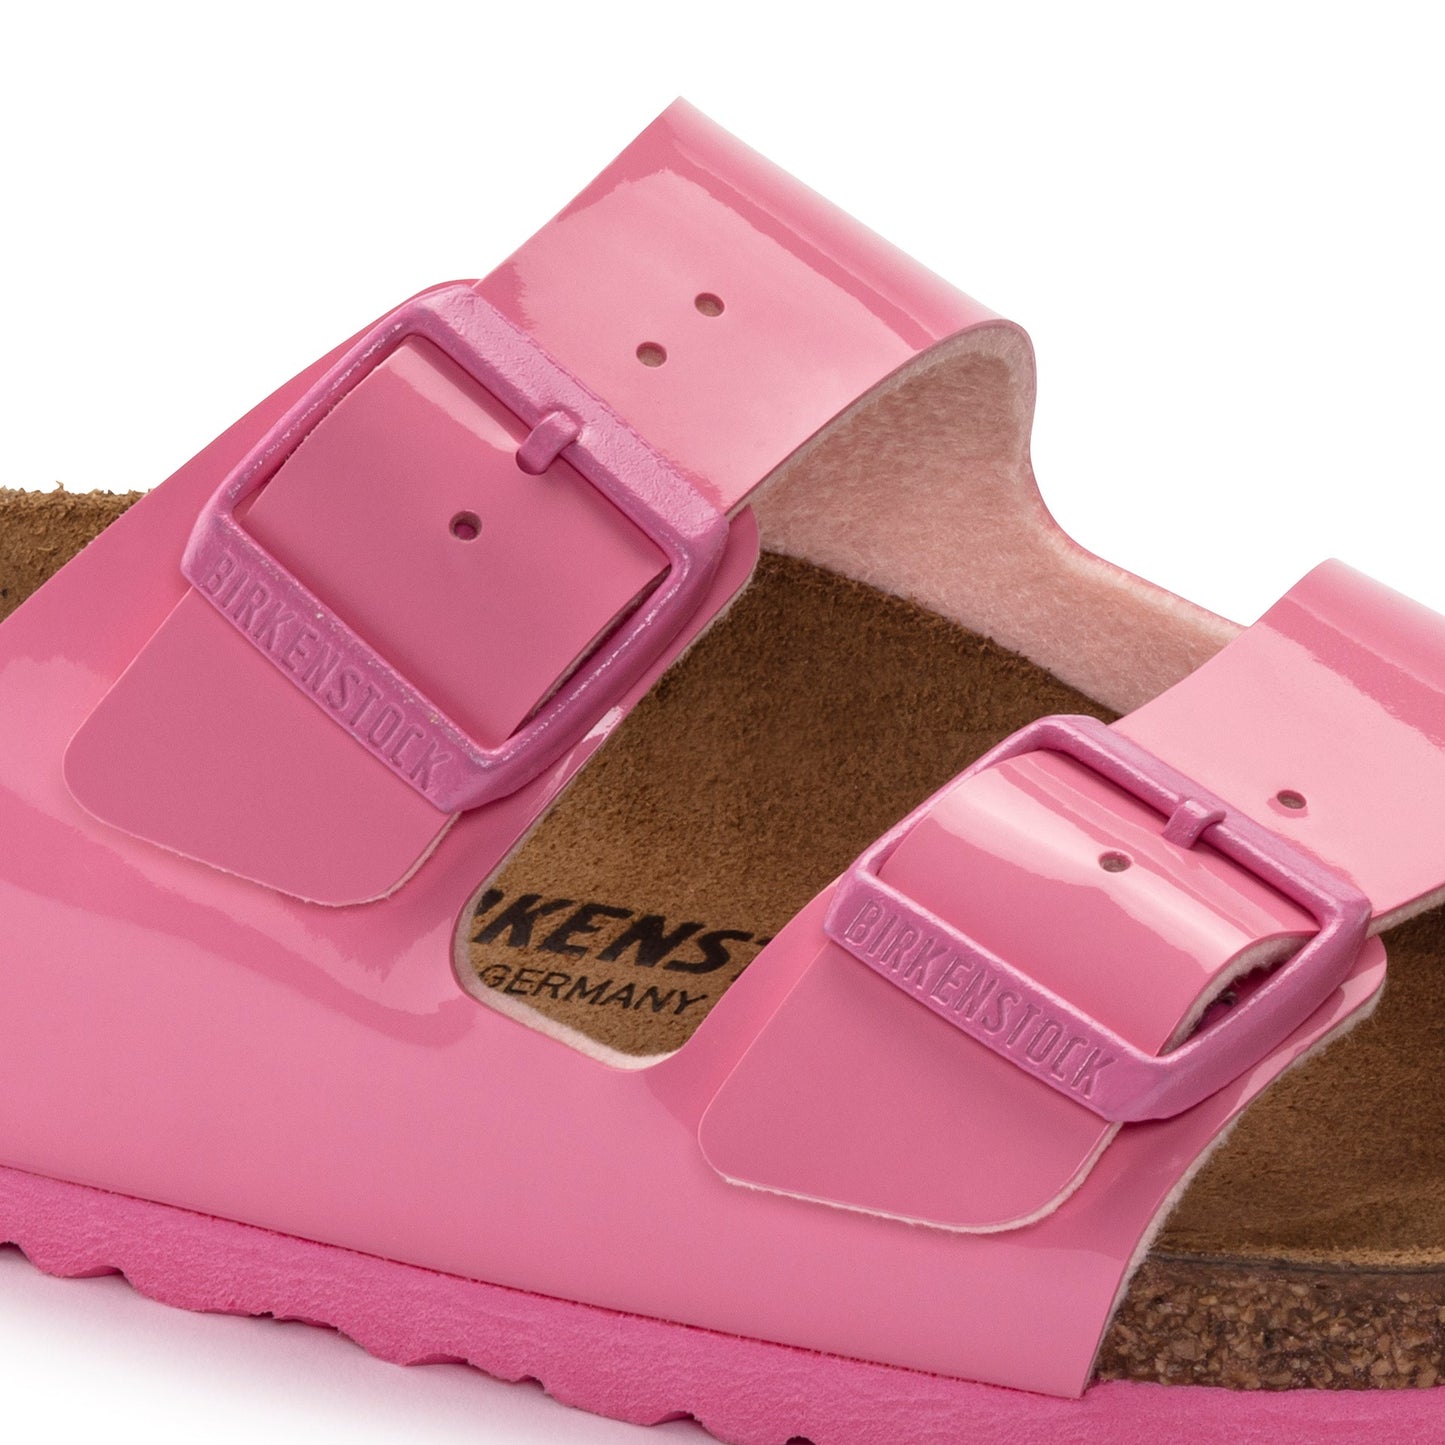 Birkenstock Arizona Sandals Pink Narrow Fit